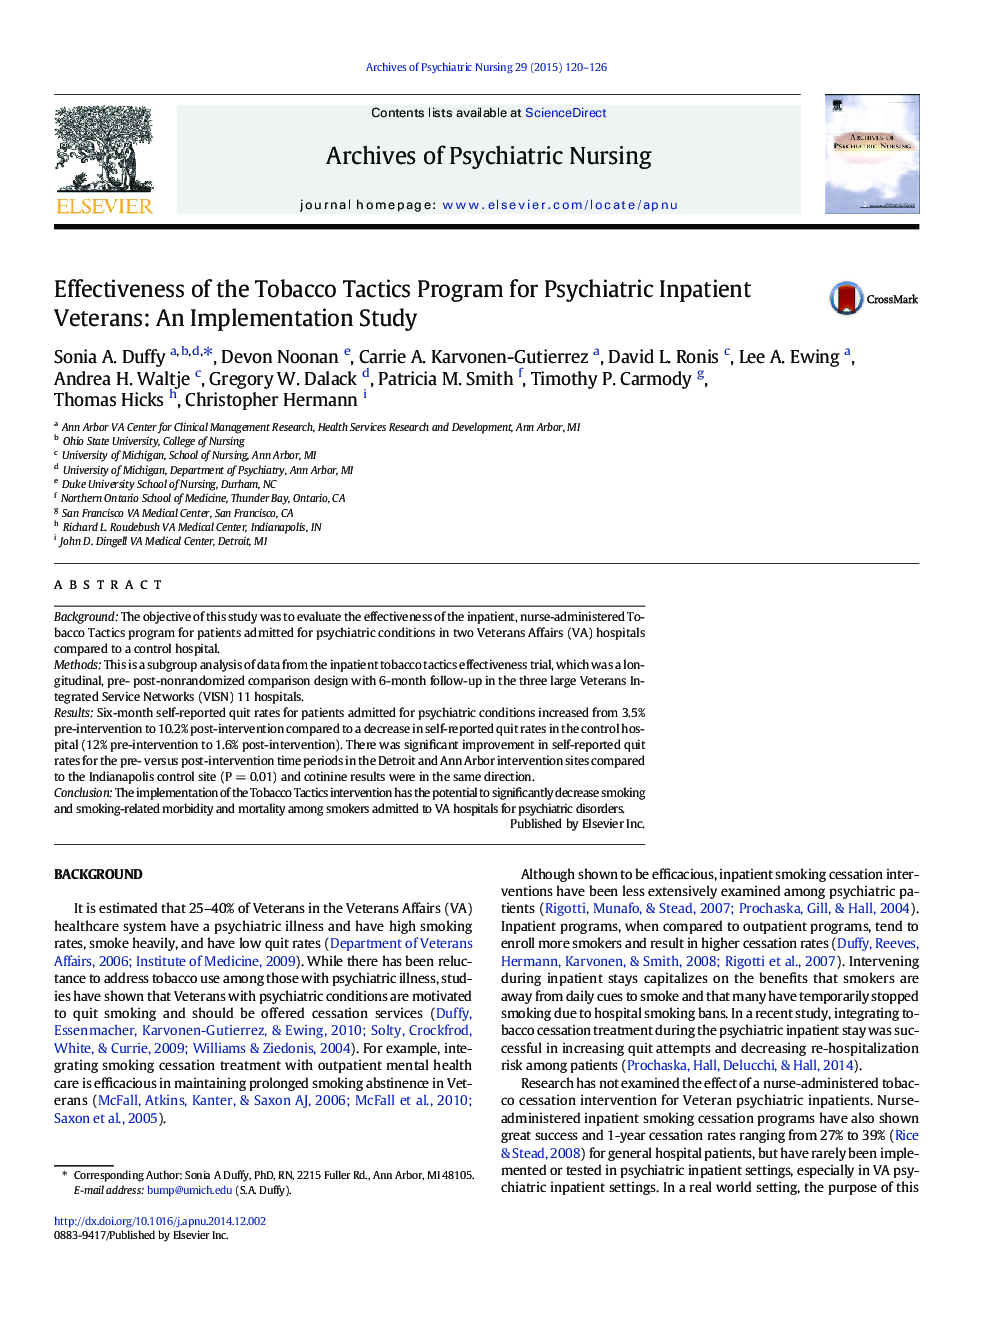 Effectiveness of the Tobacco Tactics Program for Psychiatric Inpatient Veterans: An Implementation Study